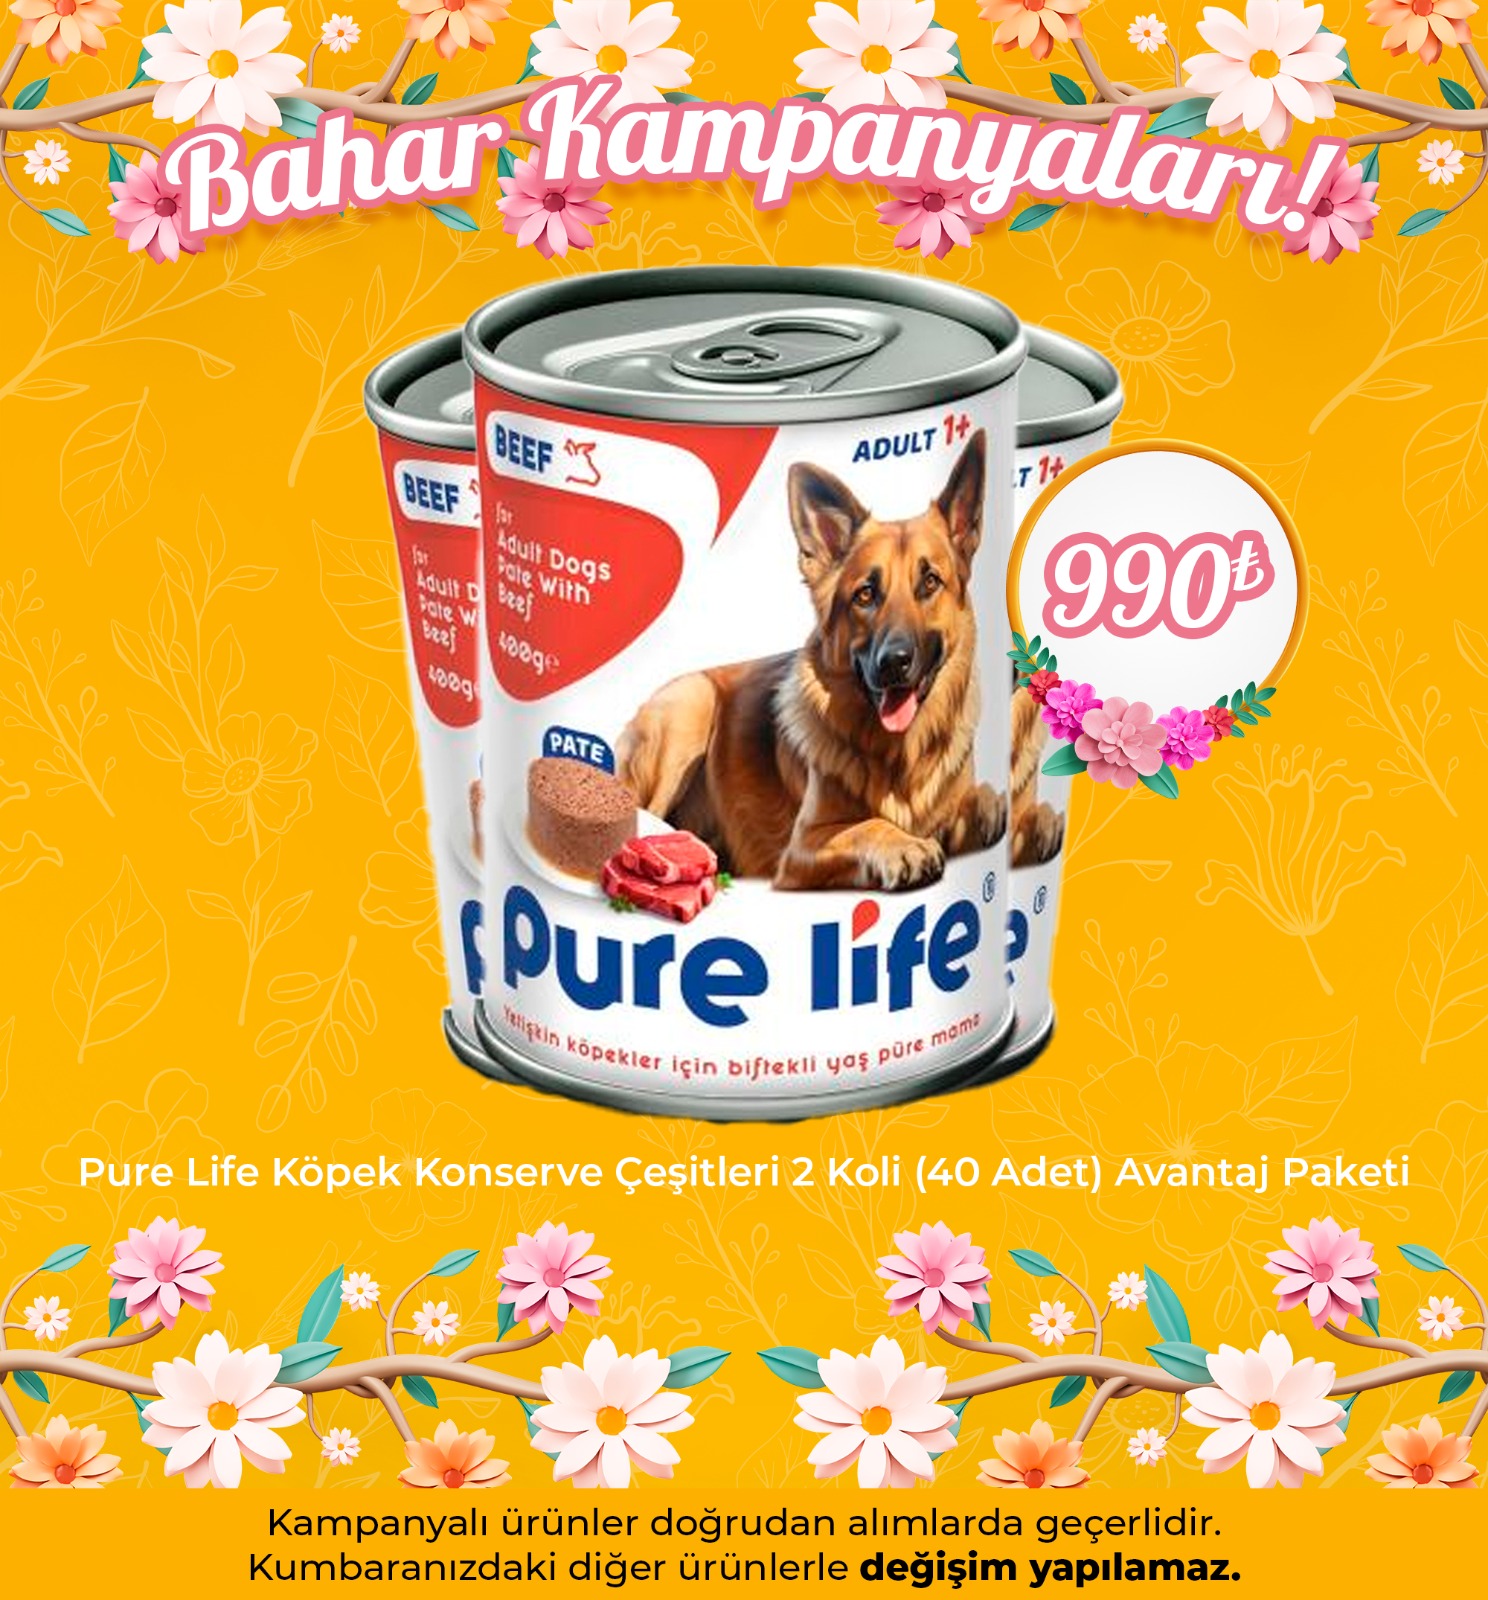 Pure Life Köpek Konserve Çeşitleri 2 Koli (40 Adet) Avantaj Paketi